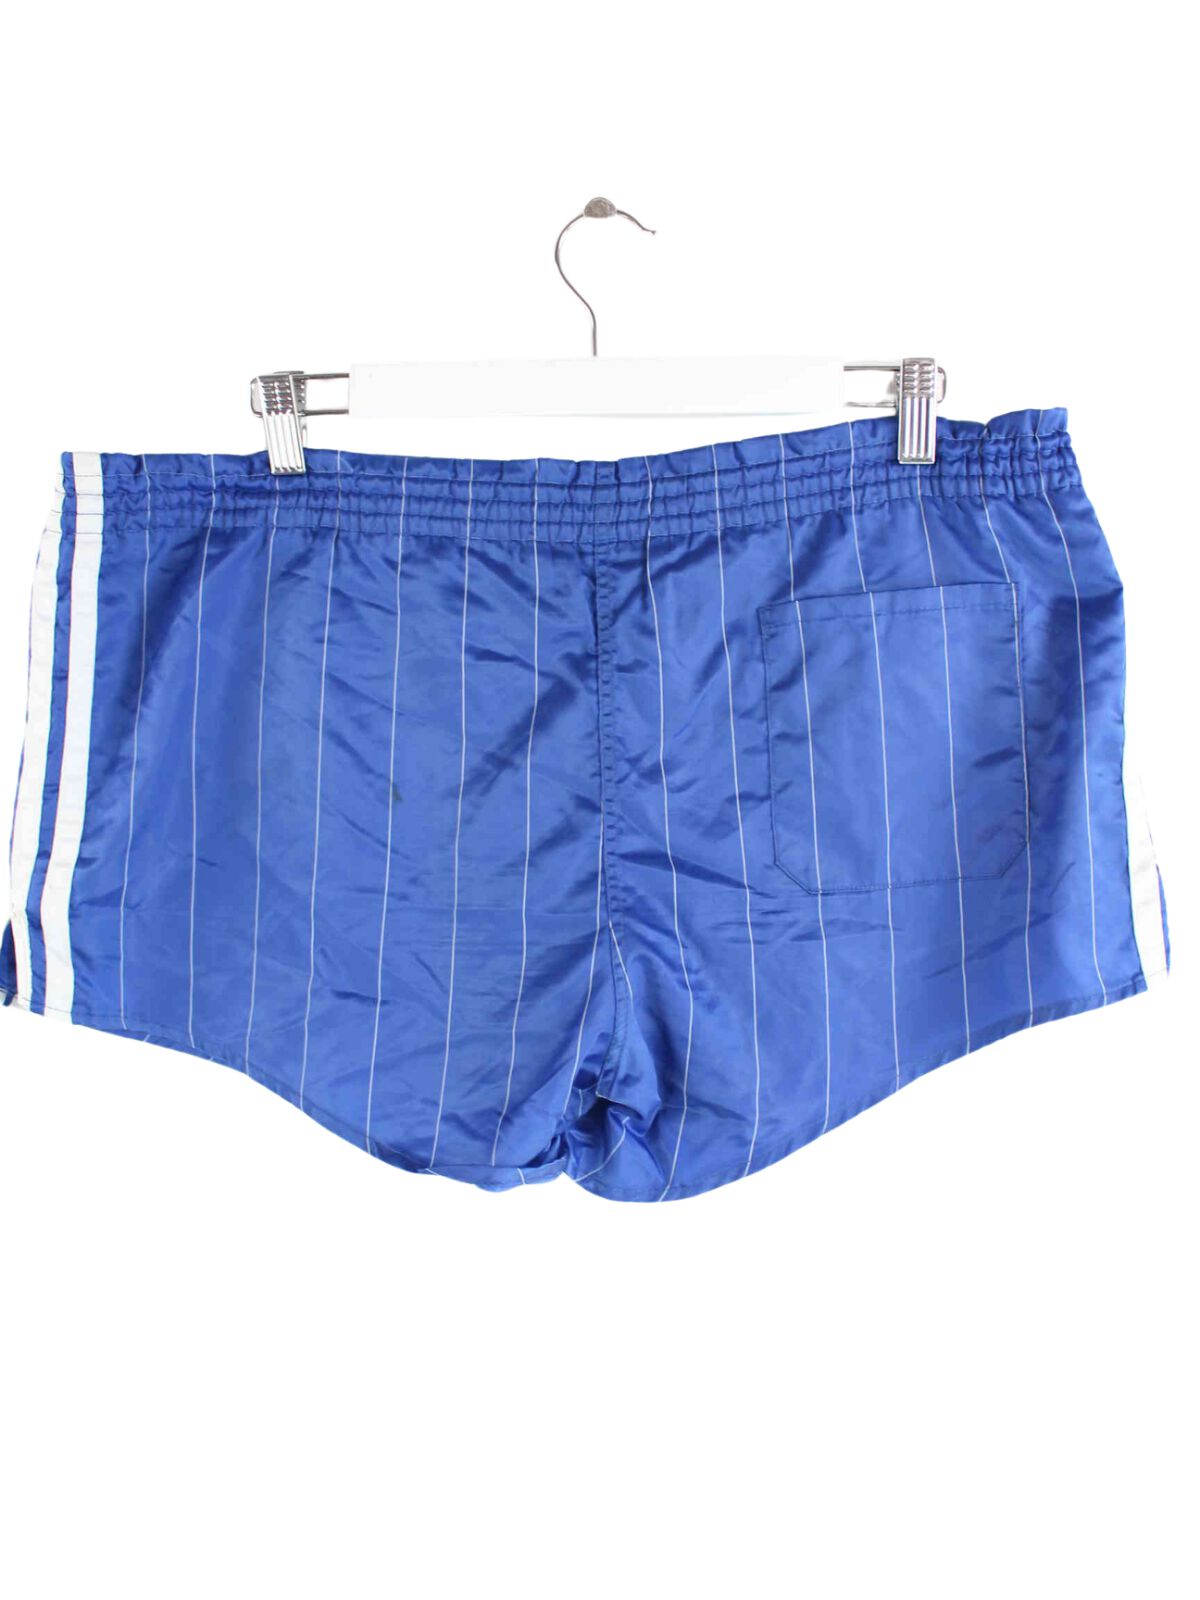 Adidas 80s Vintage Sport Shorts Blau L (back image)